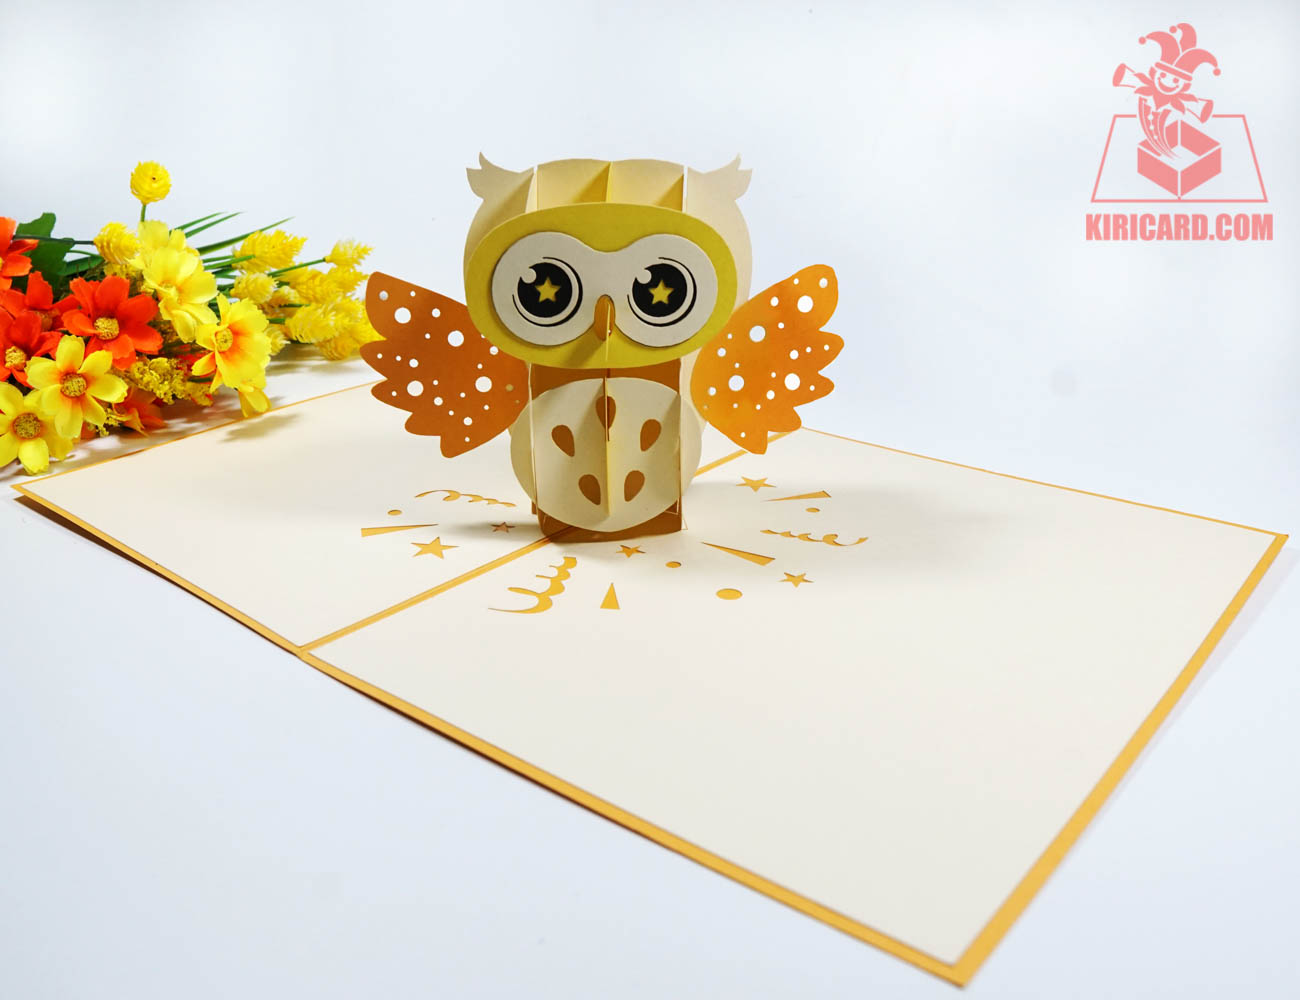 yellow-owl-pop-up-card-04